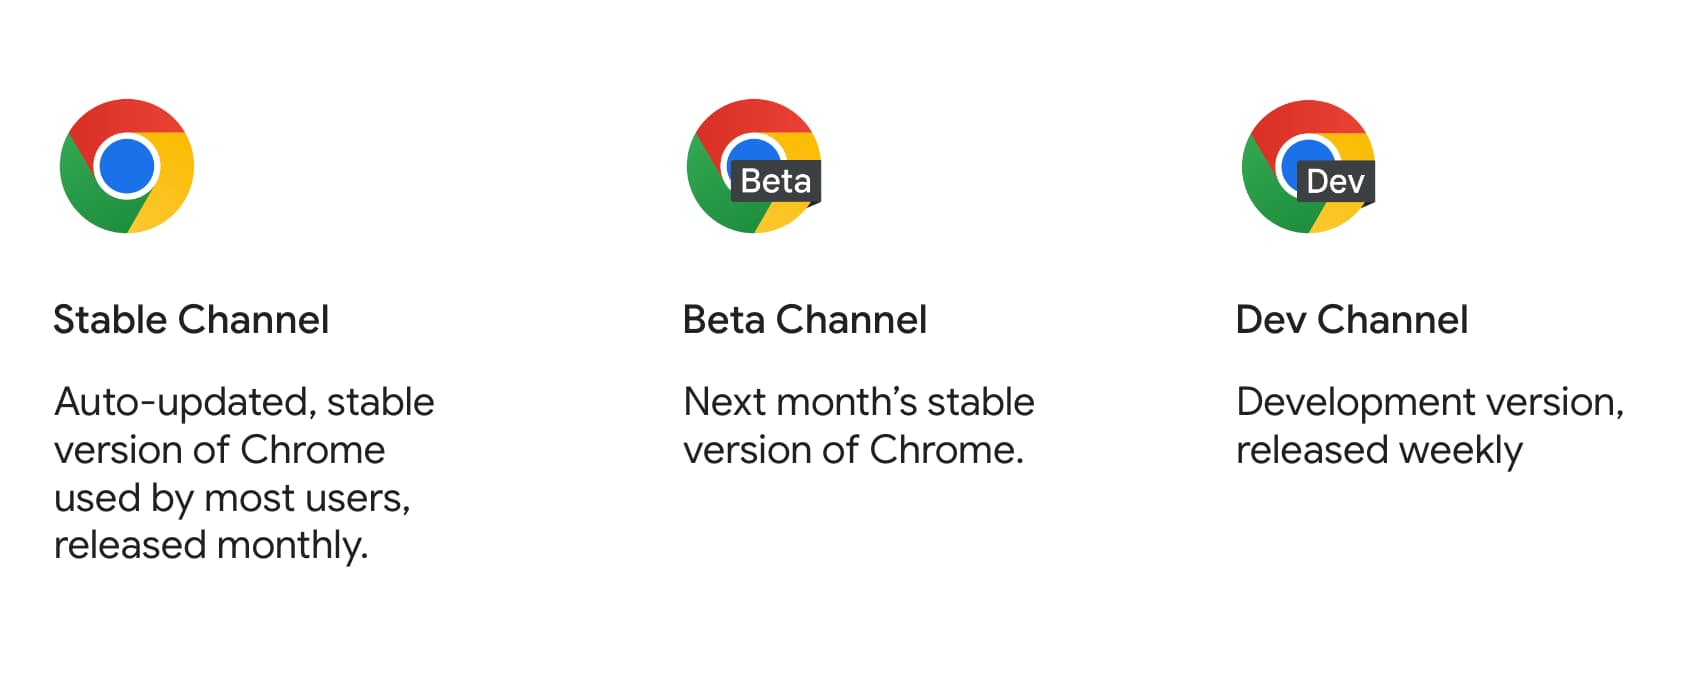 Chrome 稳定版、Beta 版和开发者版的产品图标及其说明。